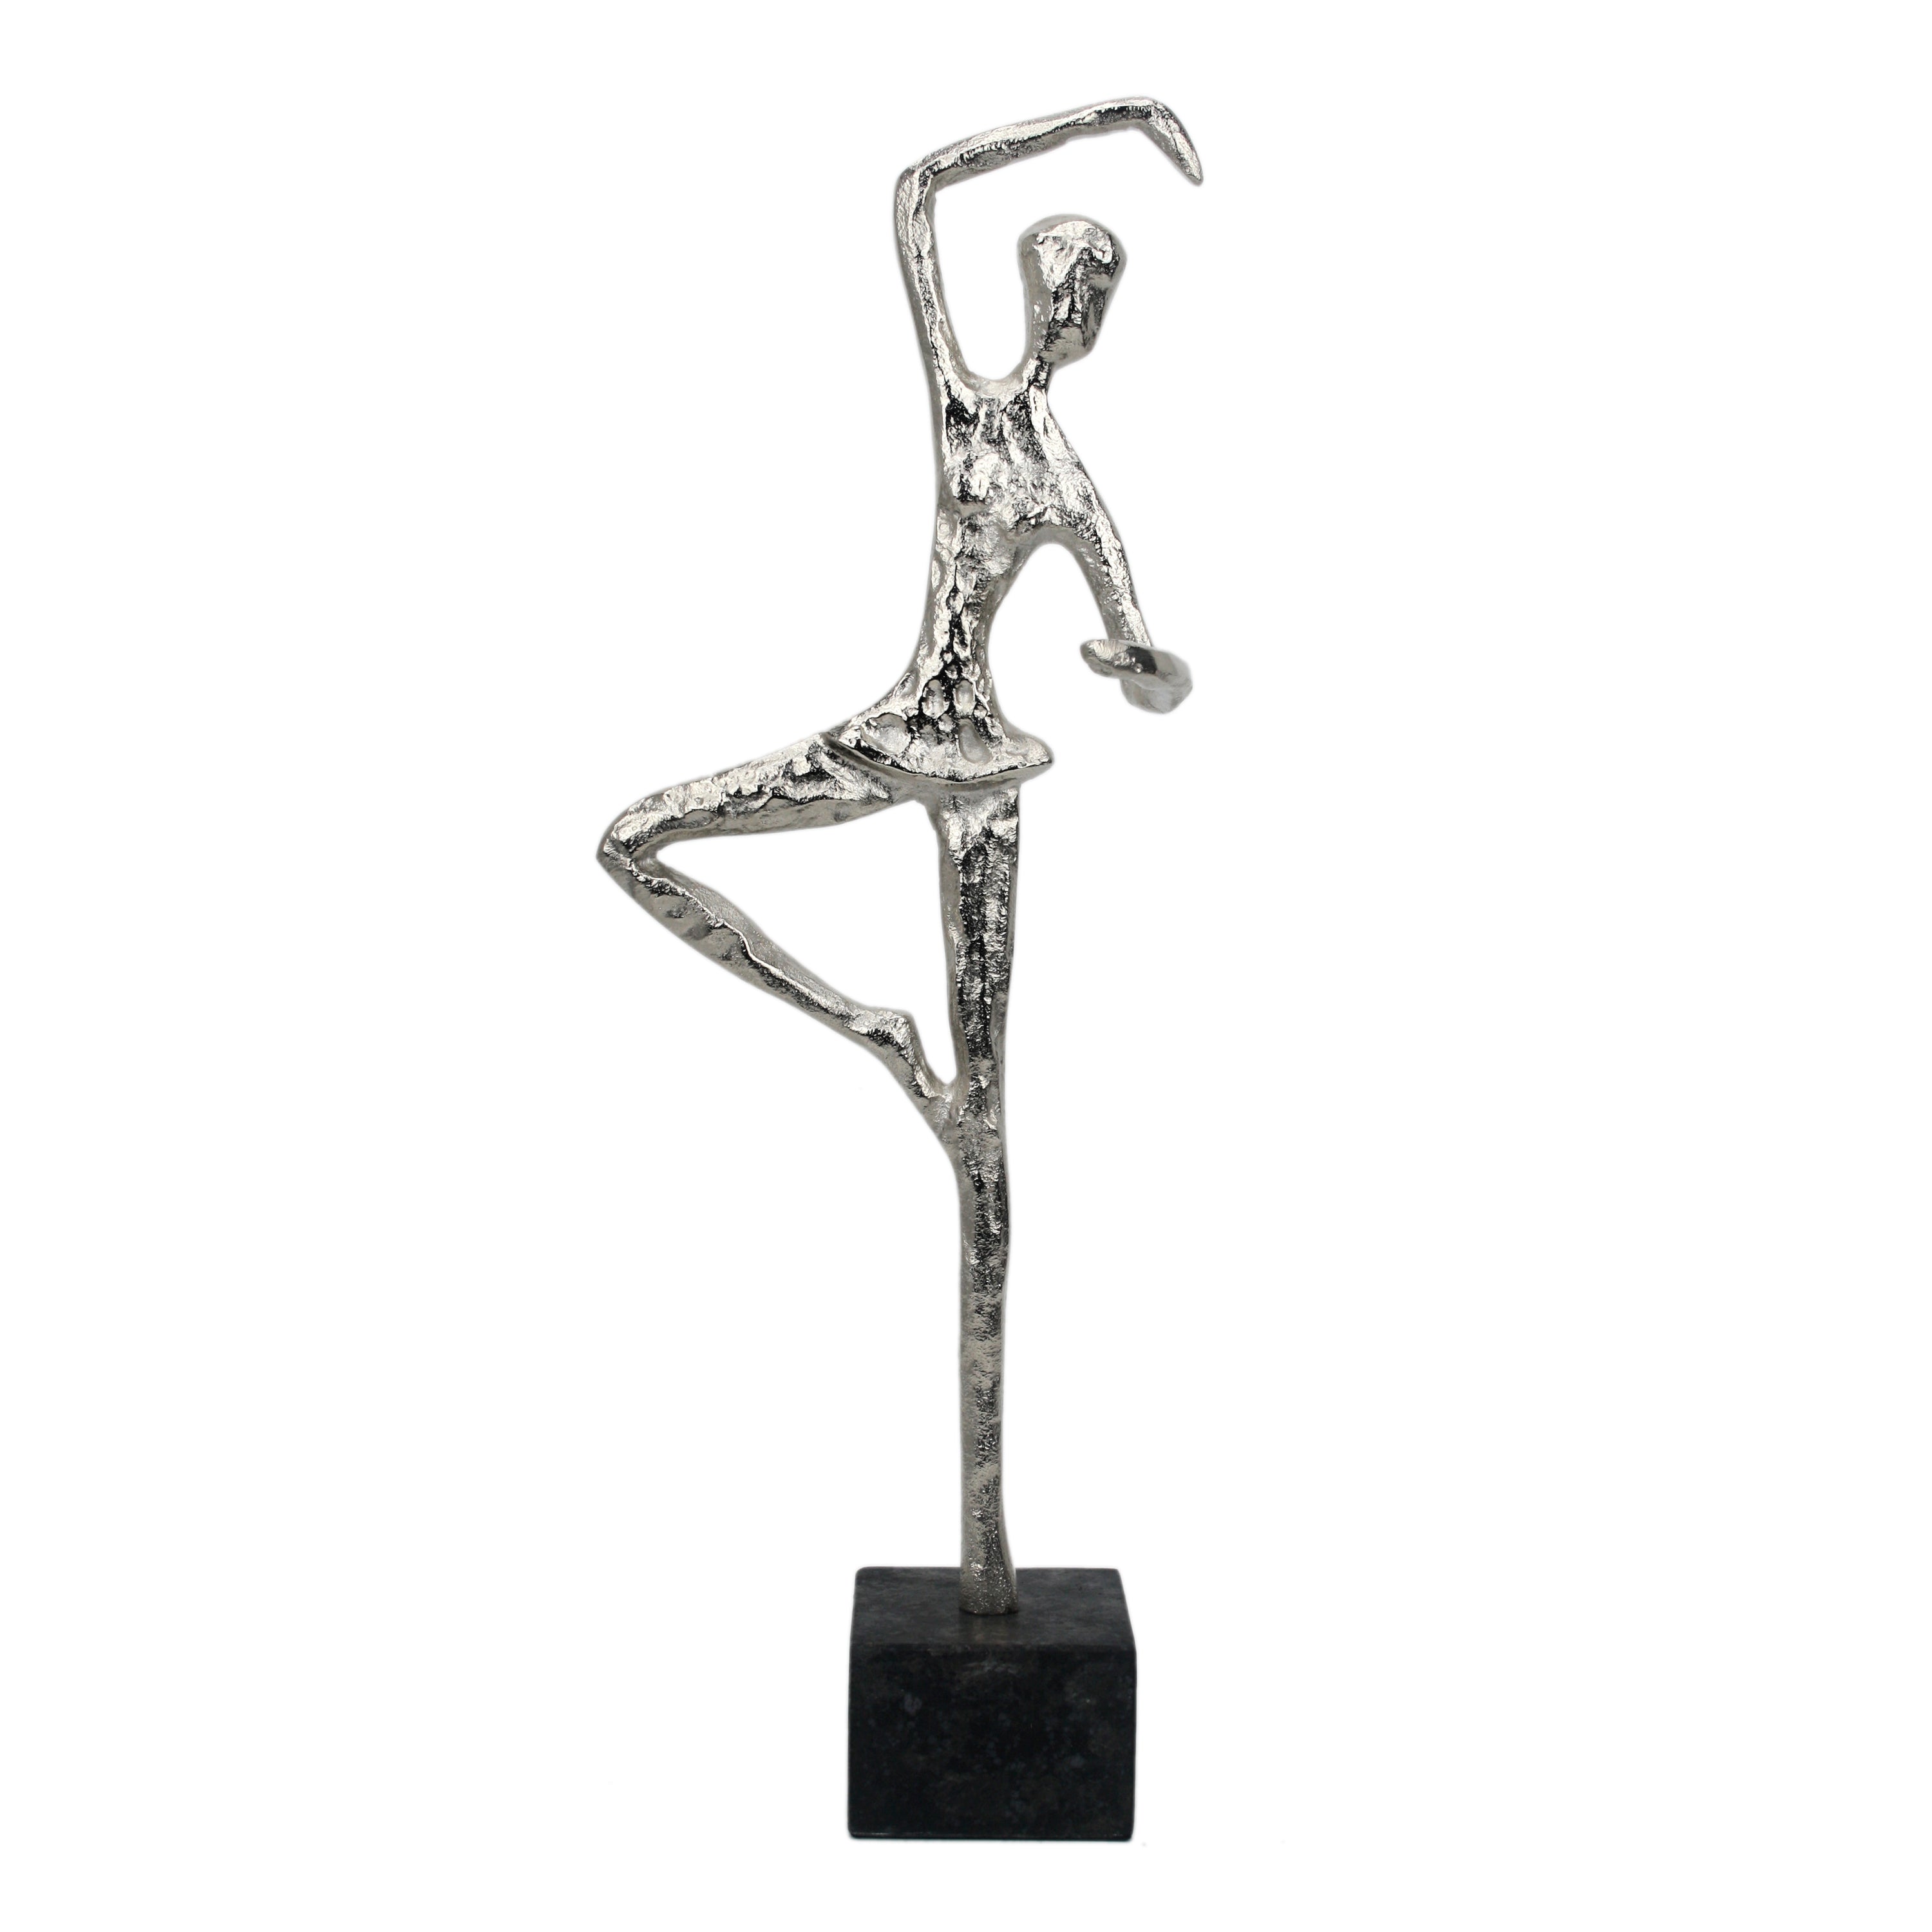 Balletic Silver Lady Sculpture